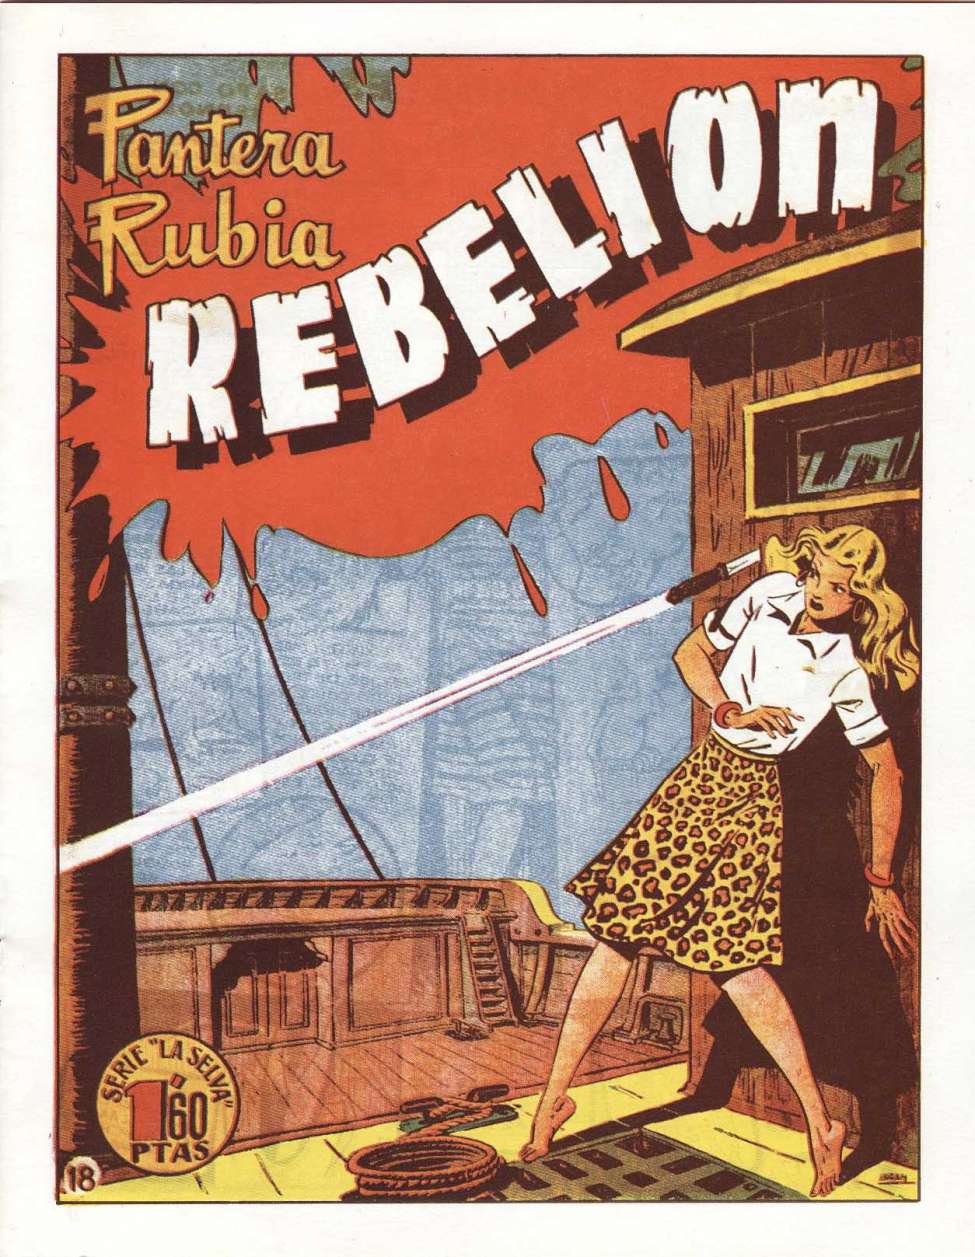 Comic Book Cover For Pantera Rubia 13 - Rebelion